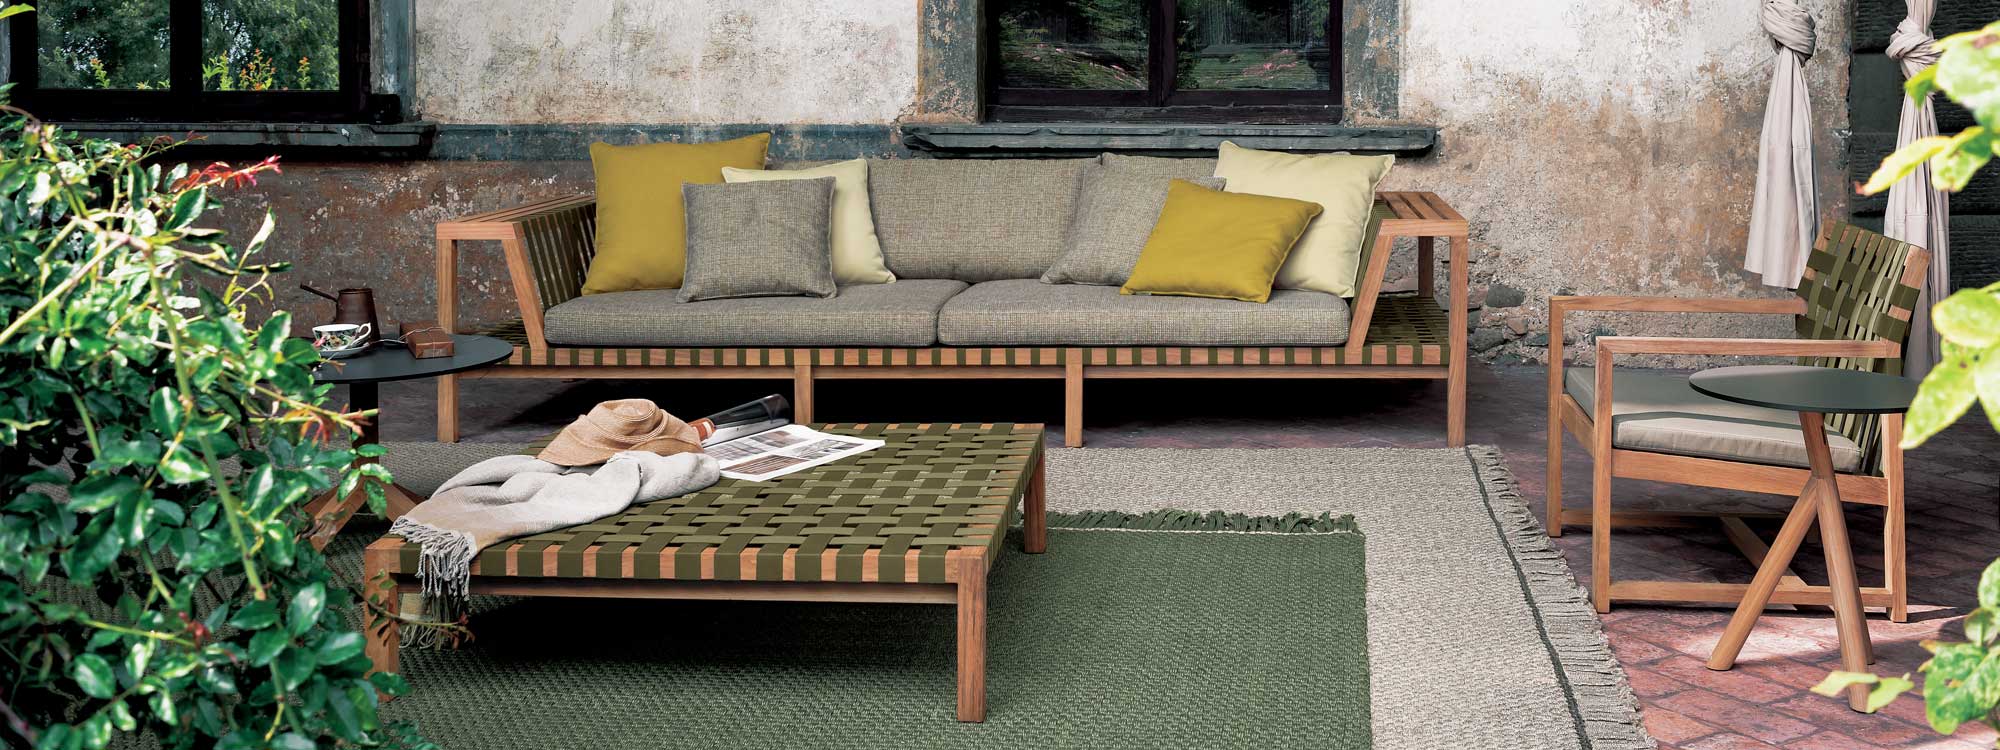 Image of RODA Network teak garden sofa with Olive webbing on outdoor terrace